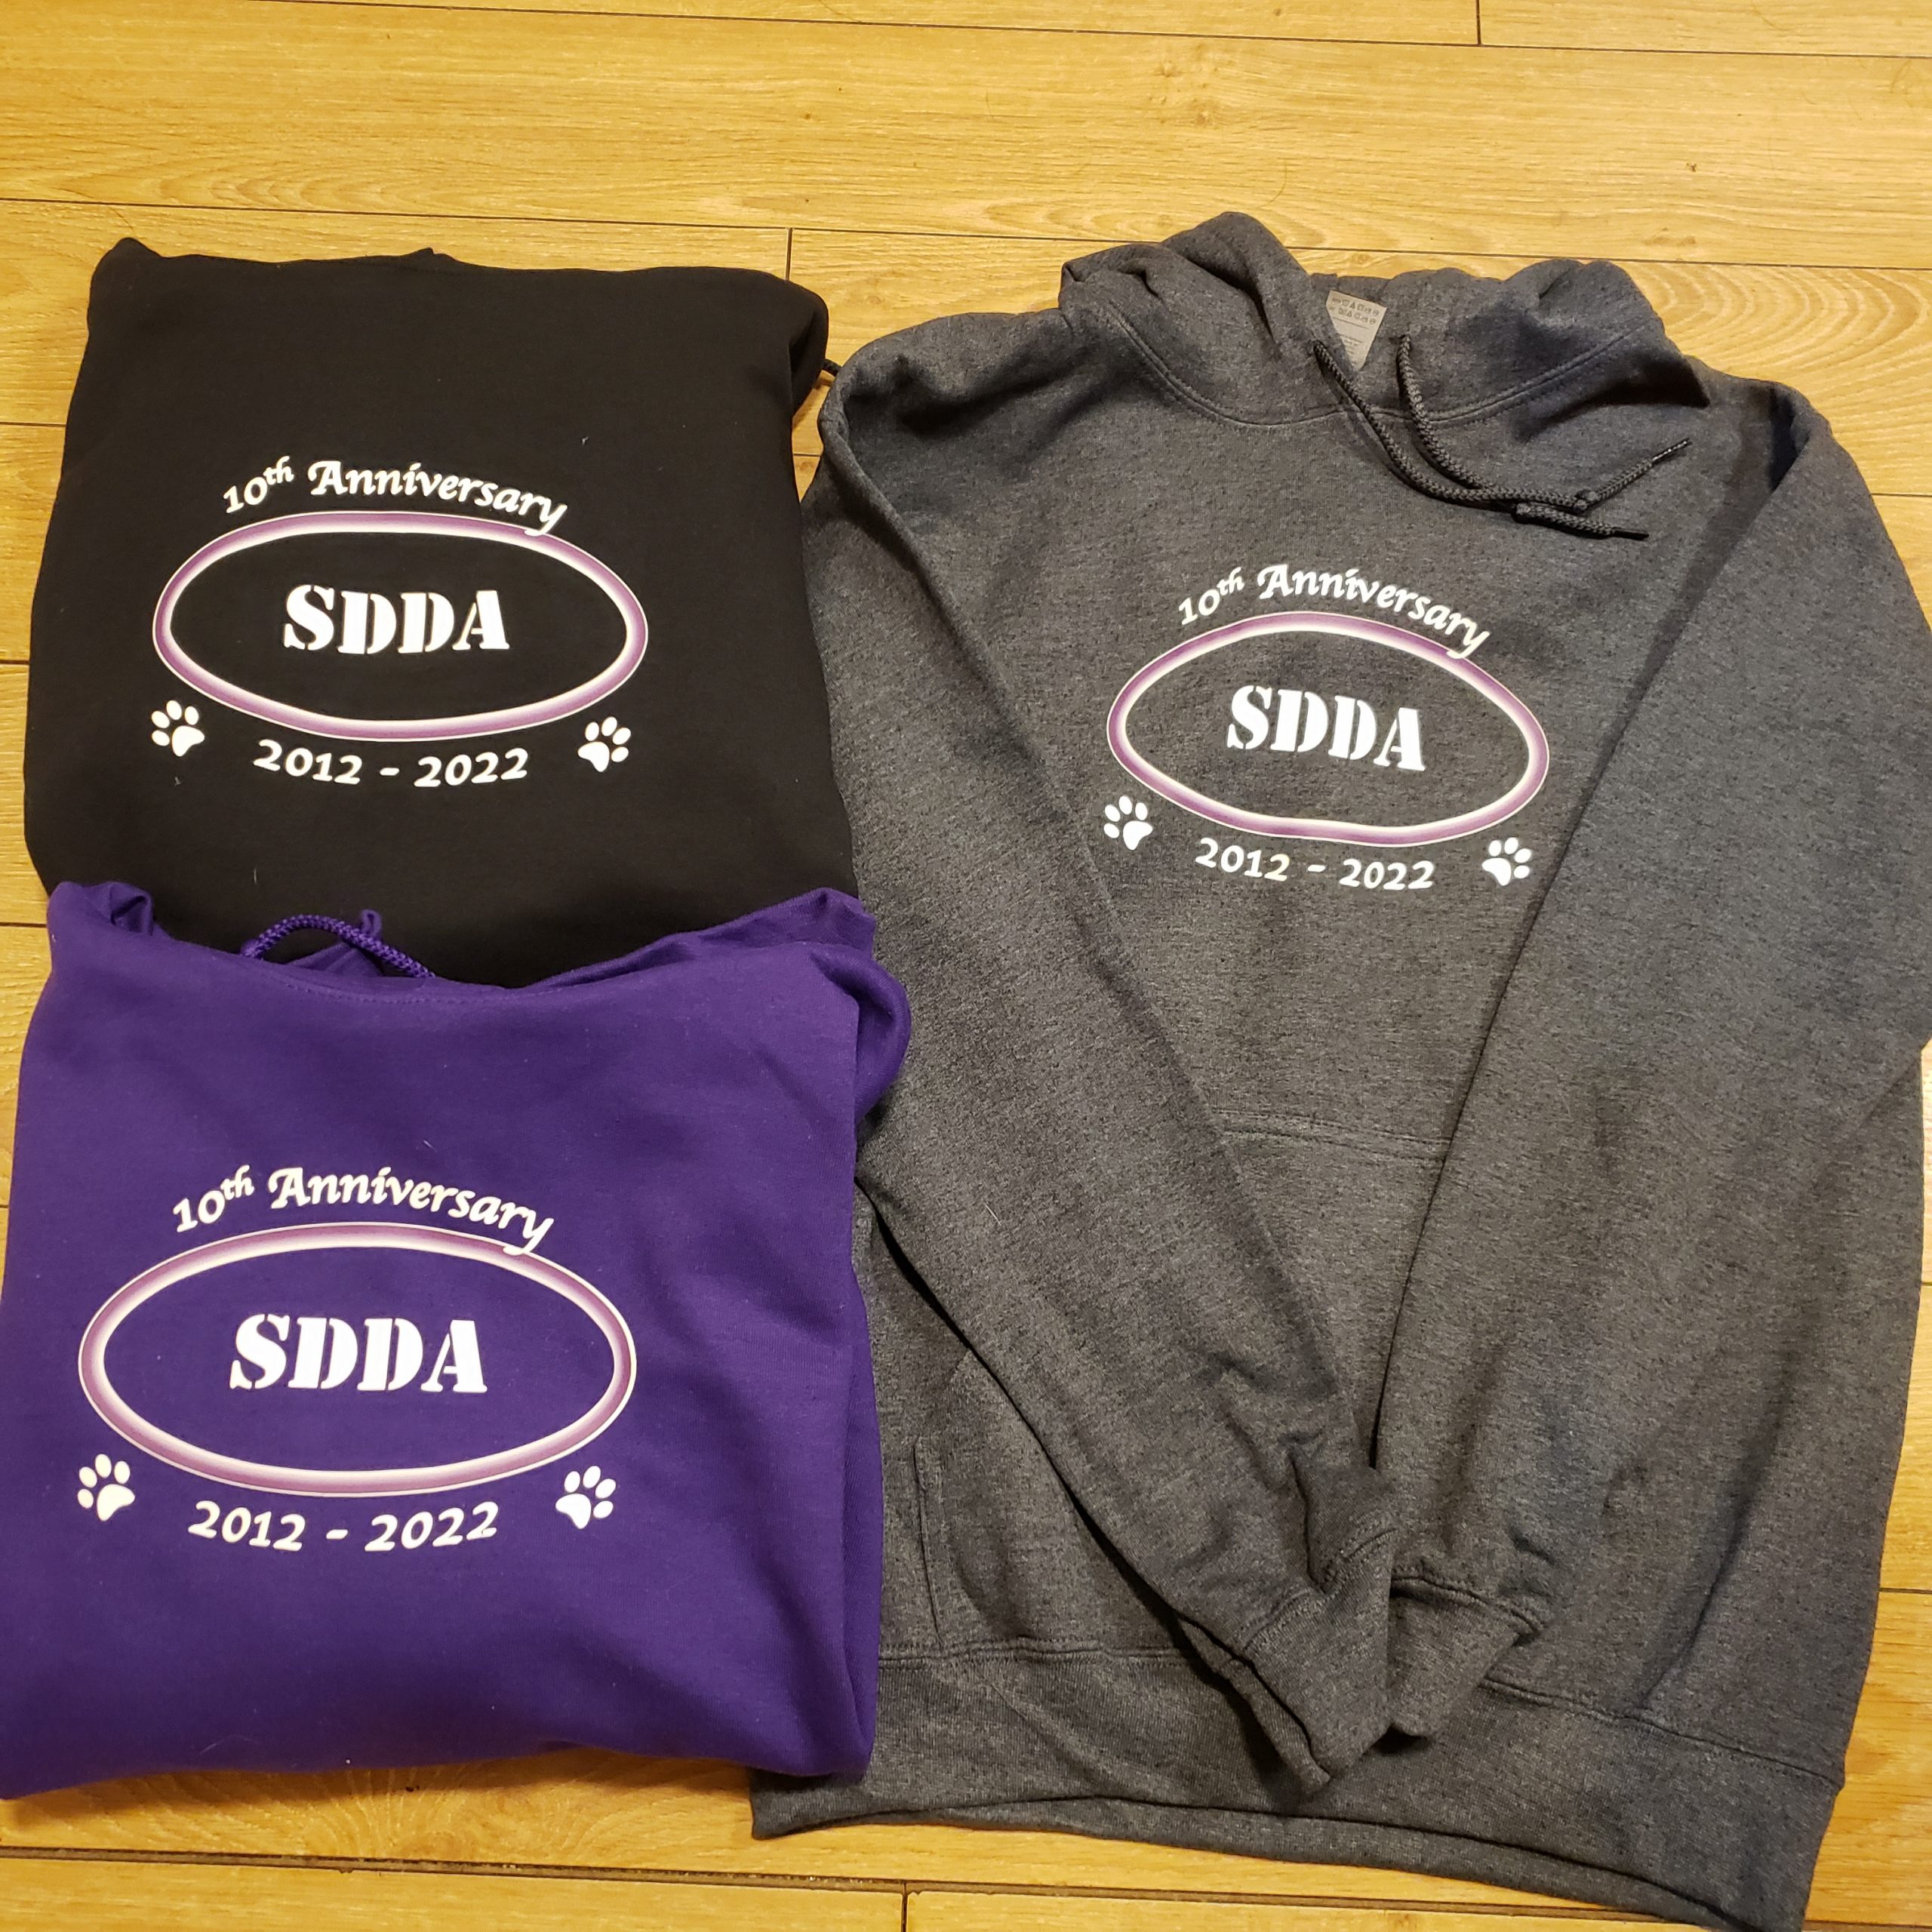 SDDA Anniversary Bunnyhug Sweatshirt – Sporting Detection Dogs Association